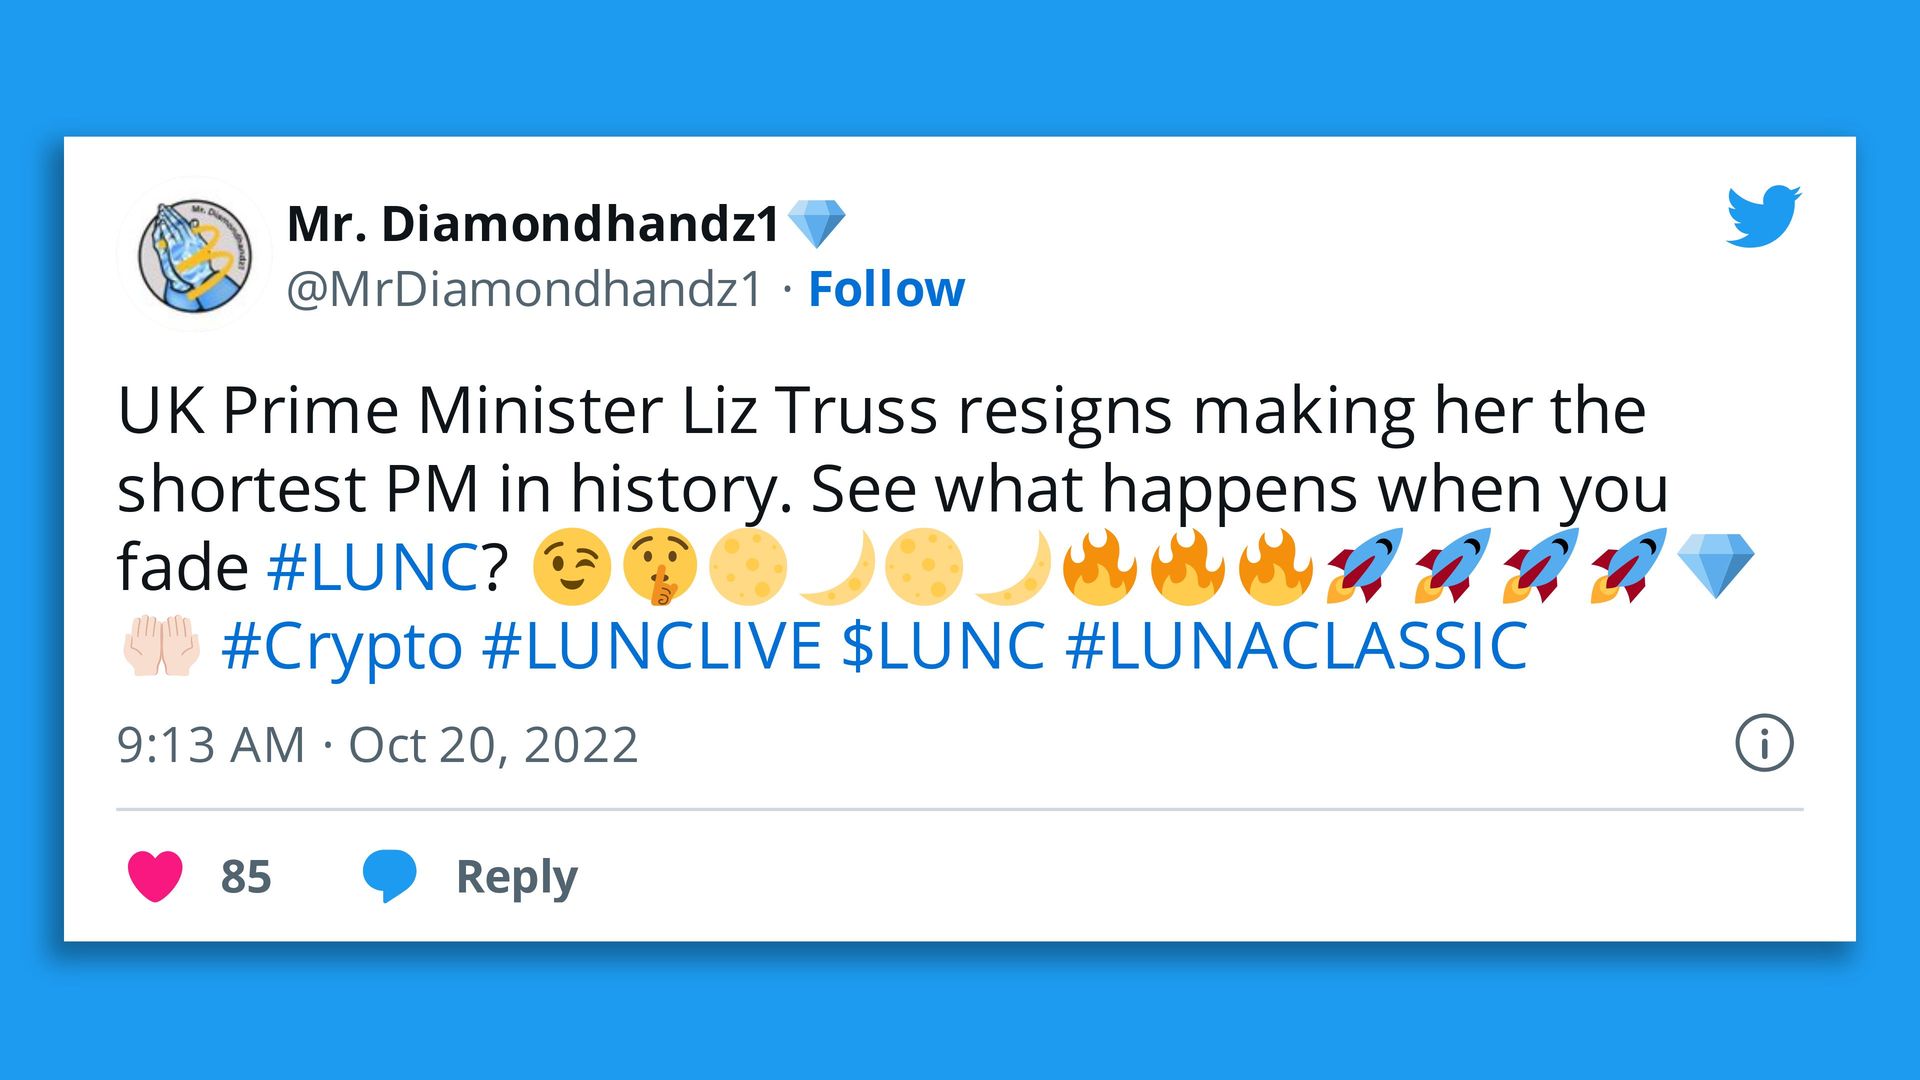 Tweet using UK Prime Minister Liz Truss' resignation to pump coins